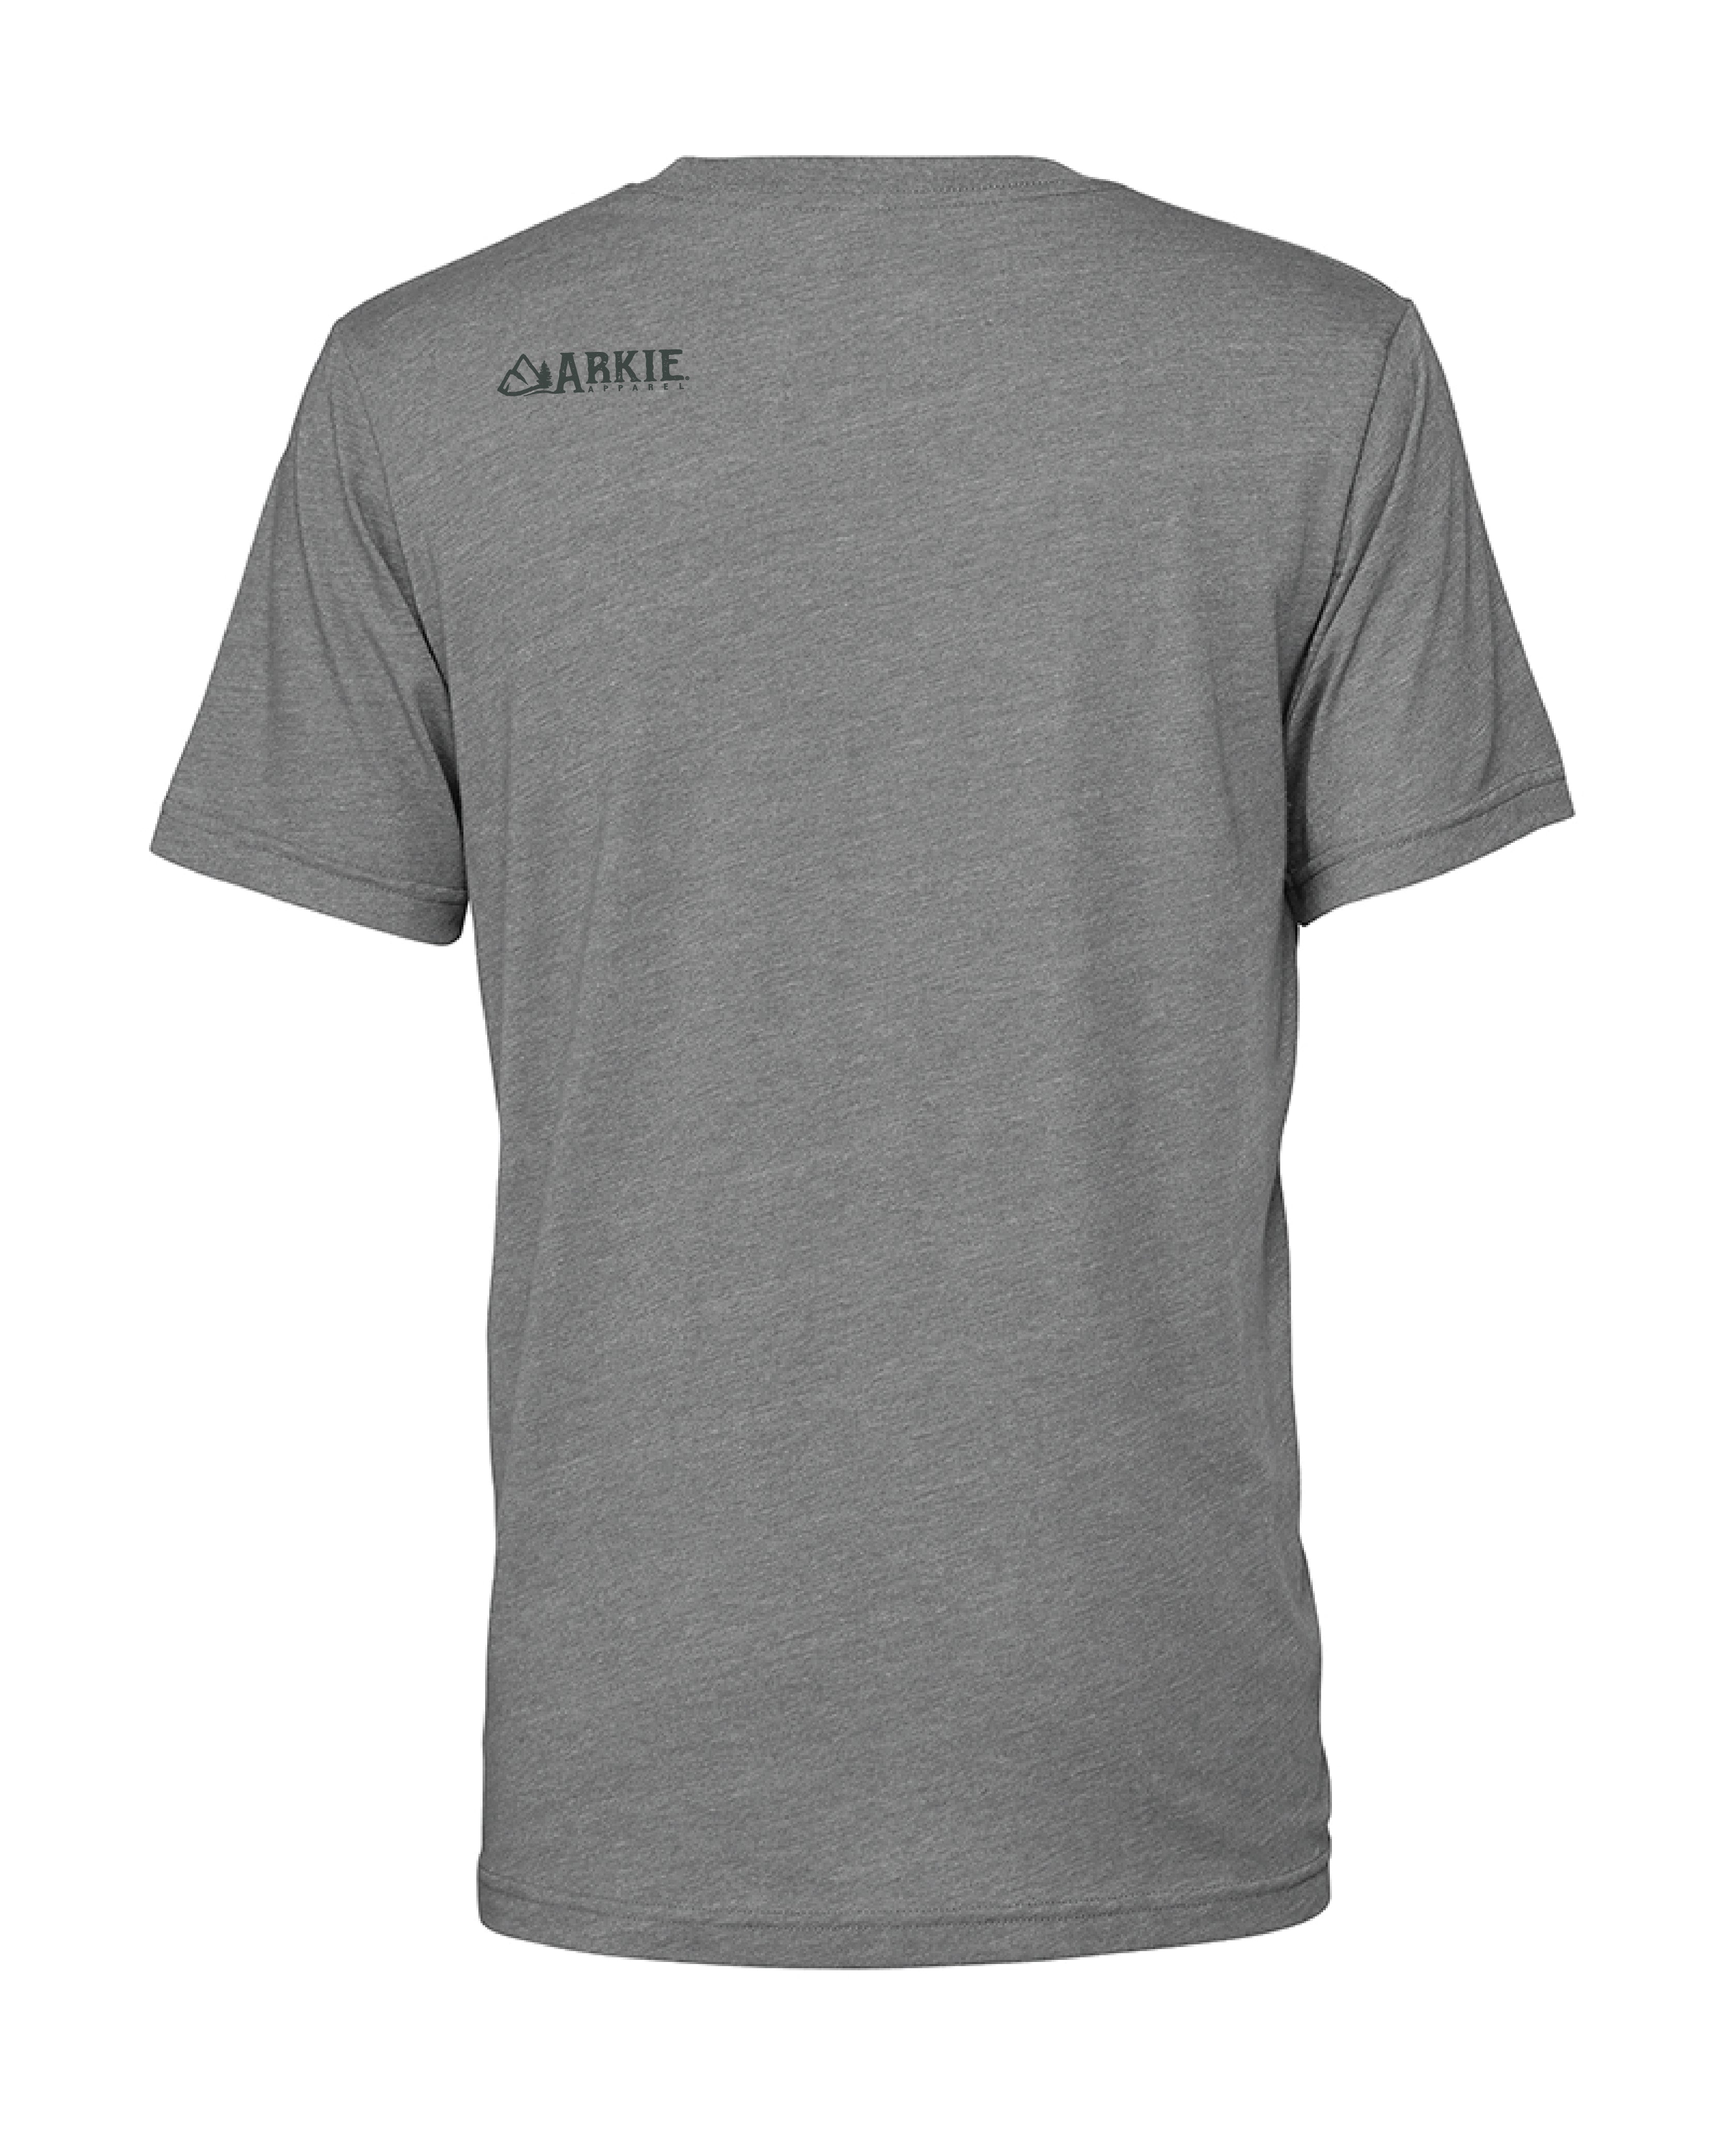 Arkie Apparel | Arkansas USA Clothing Brand